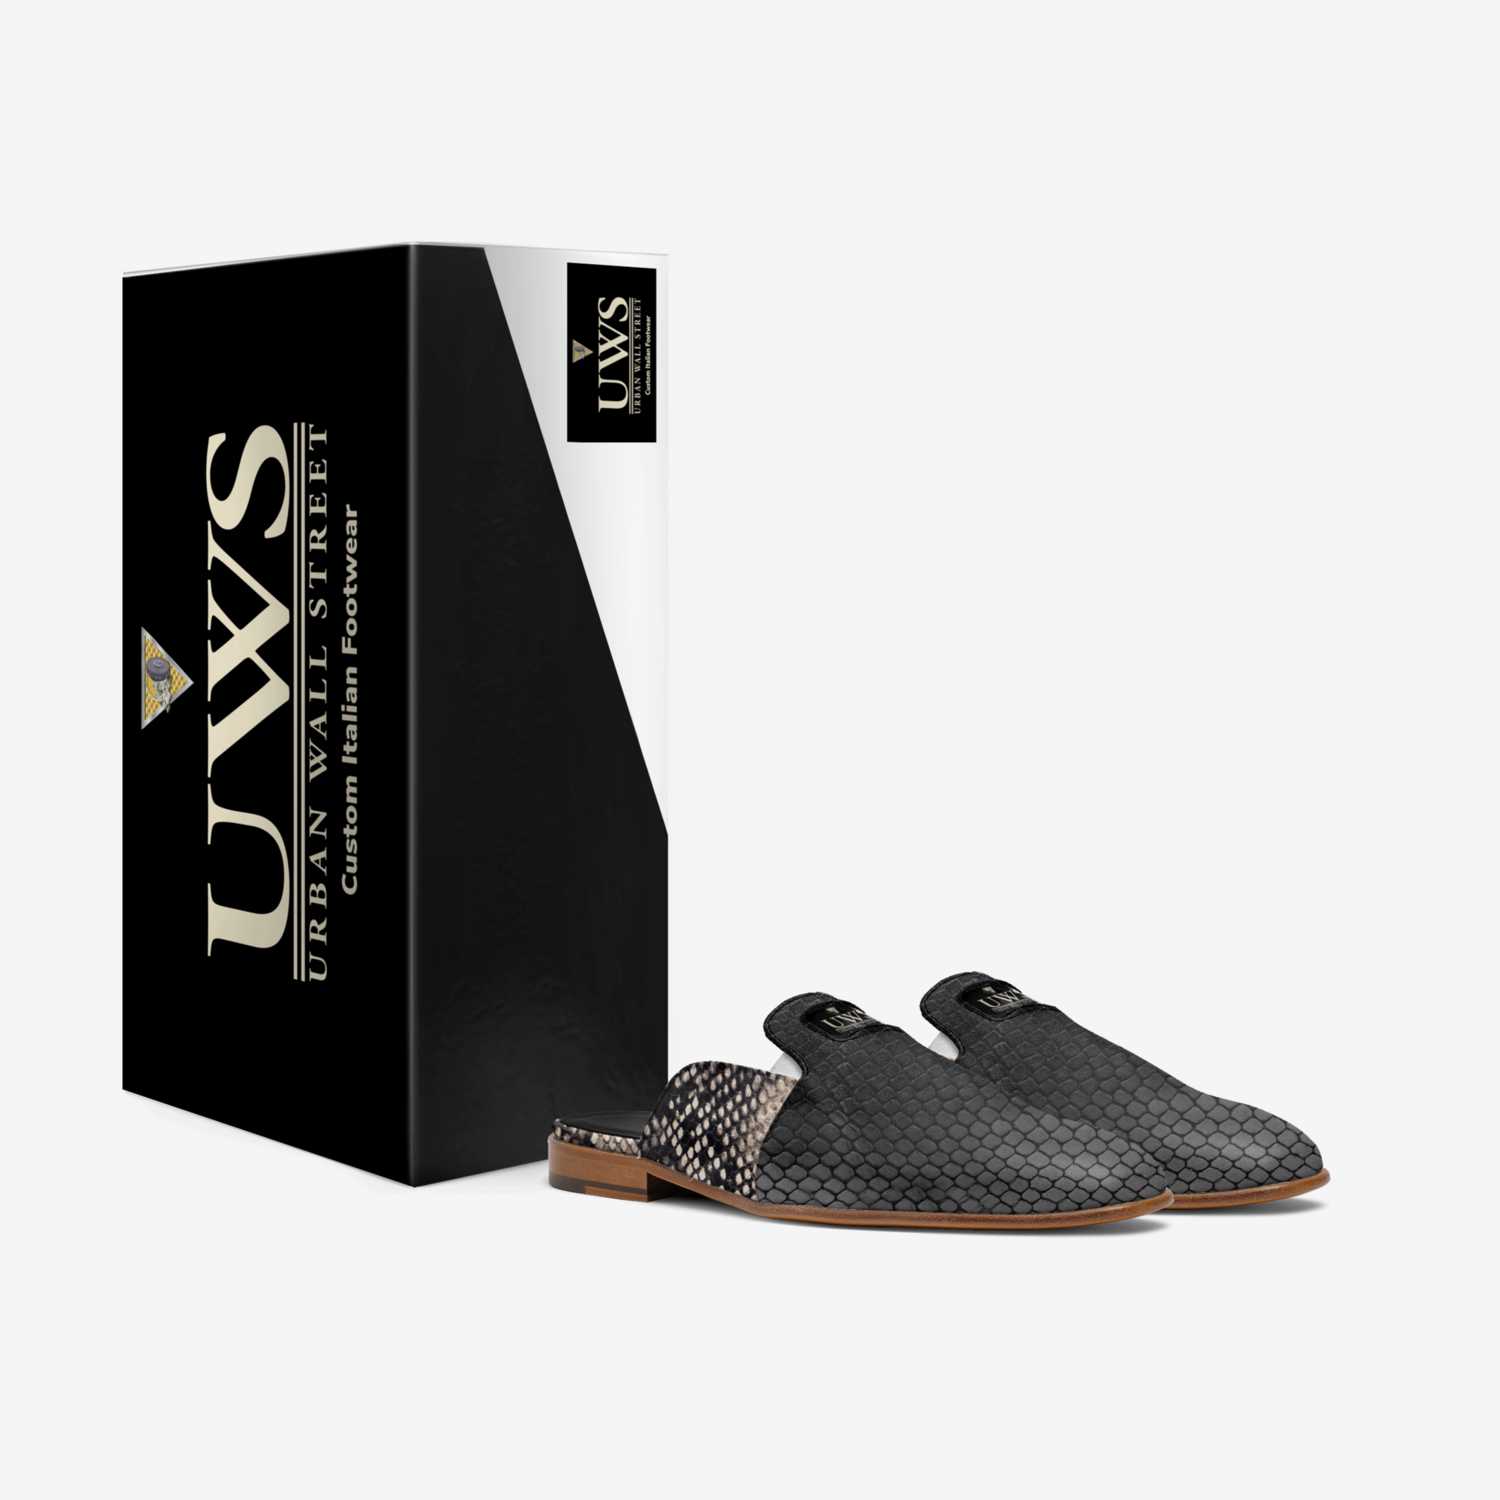 UWS EAZIES custom made in Italy shoes by Urbanwallstreet Earl | Box view